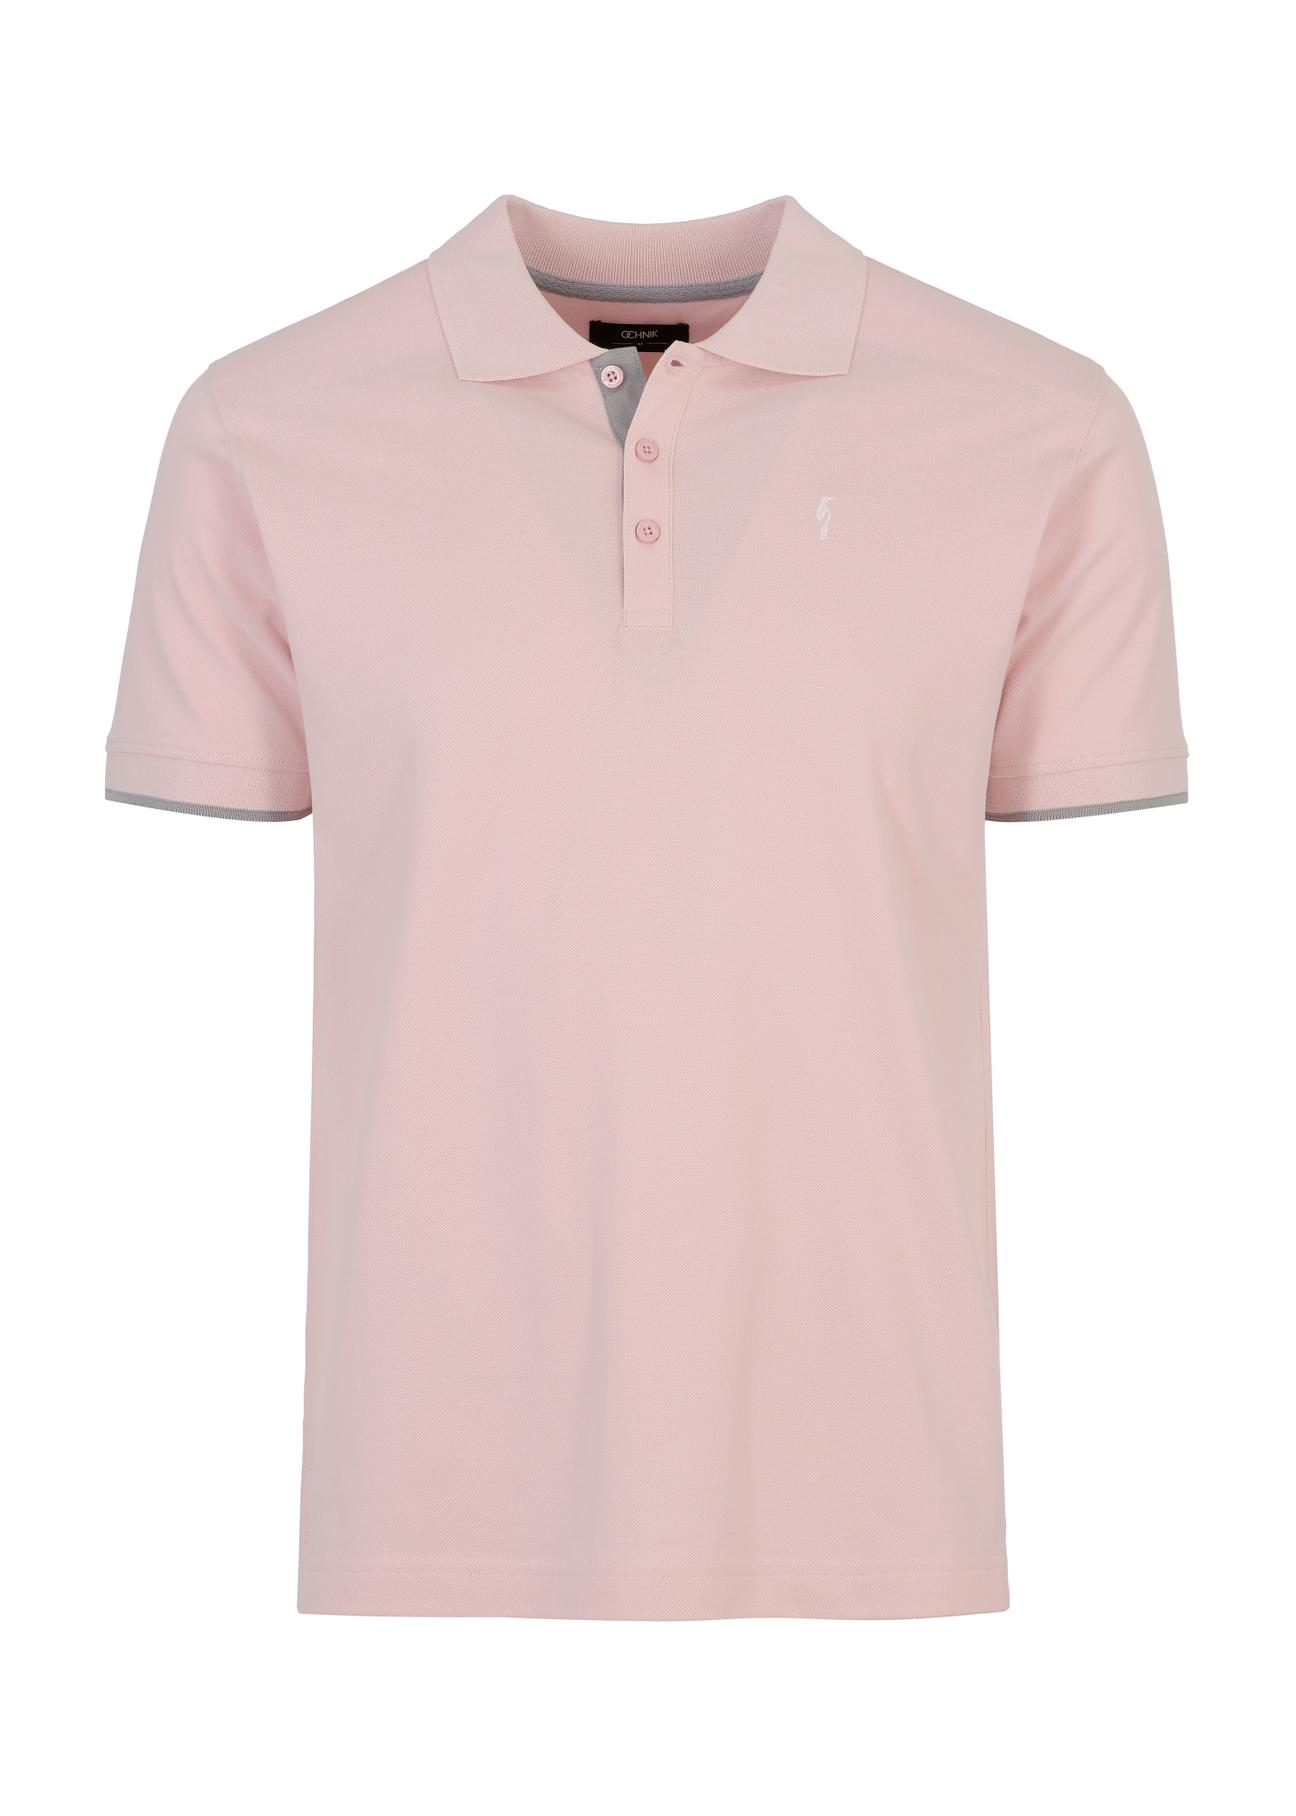 Różowa koszulka polo męska POLMT-0045A-34(W24)